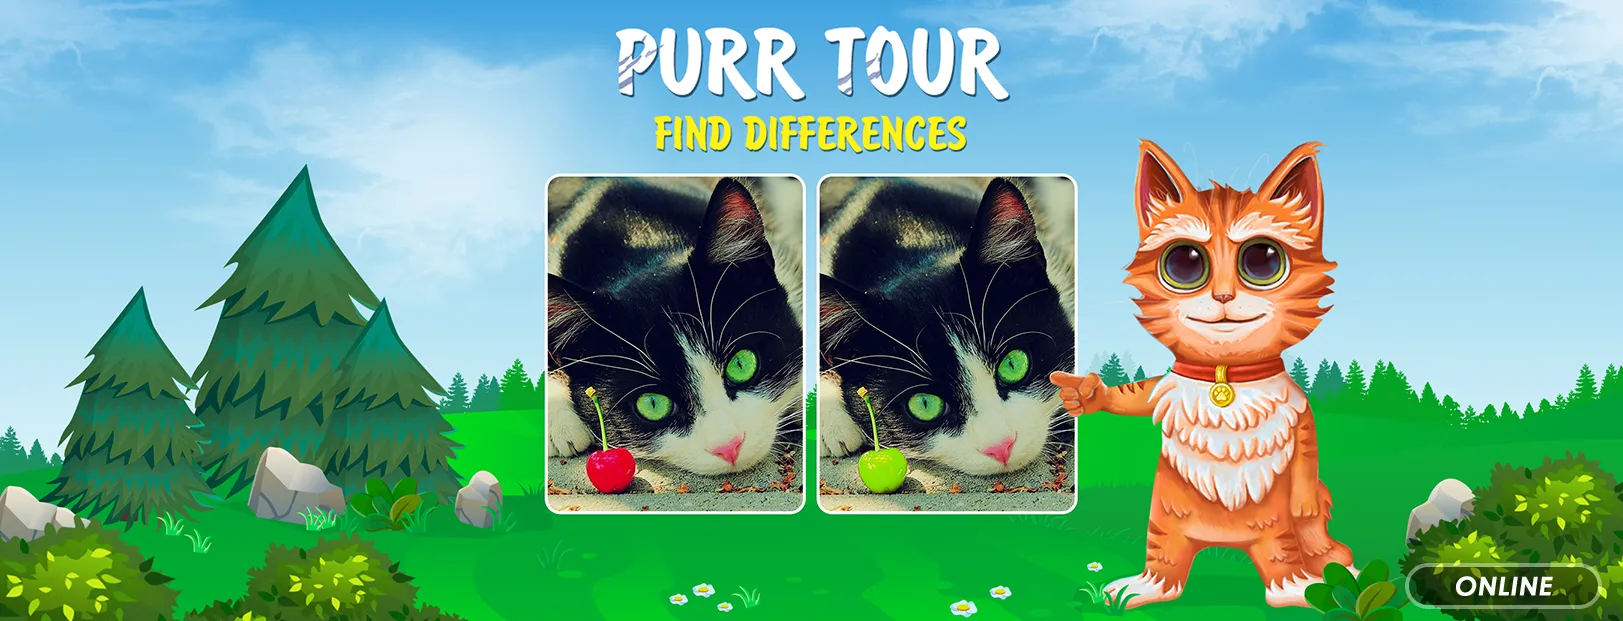 Purr tour: Find differences